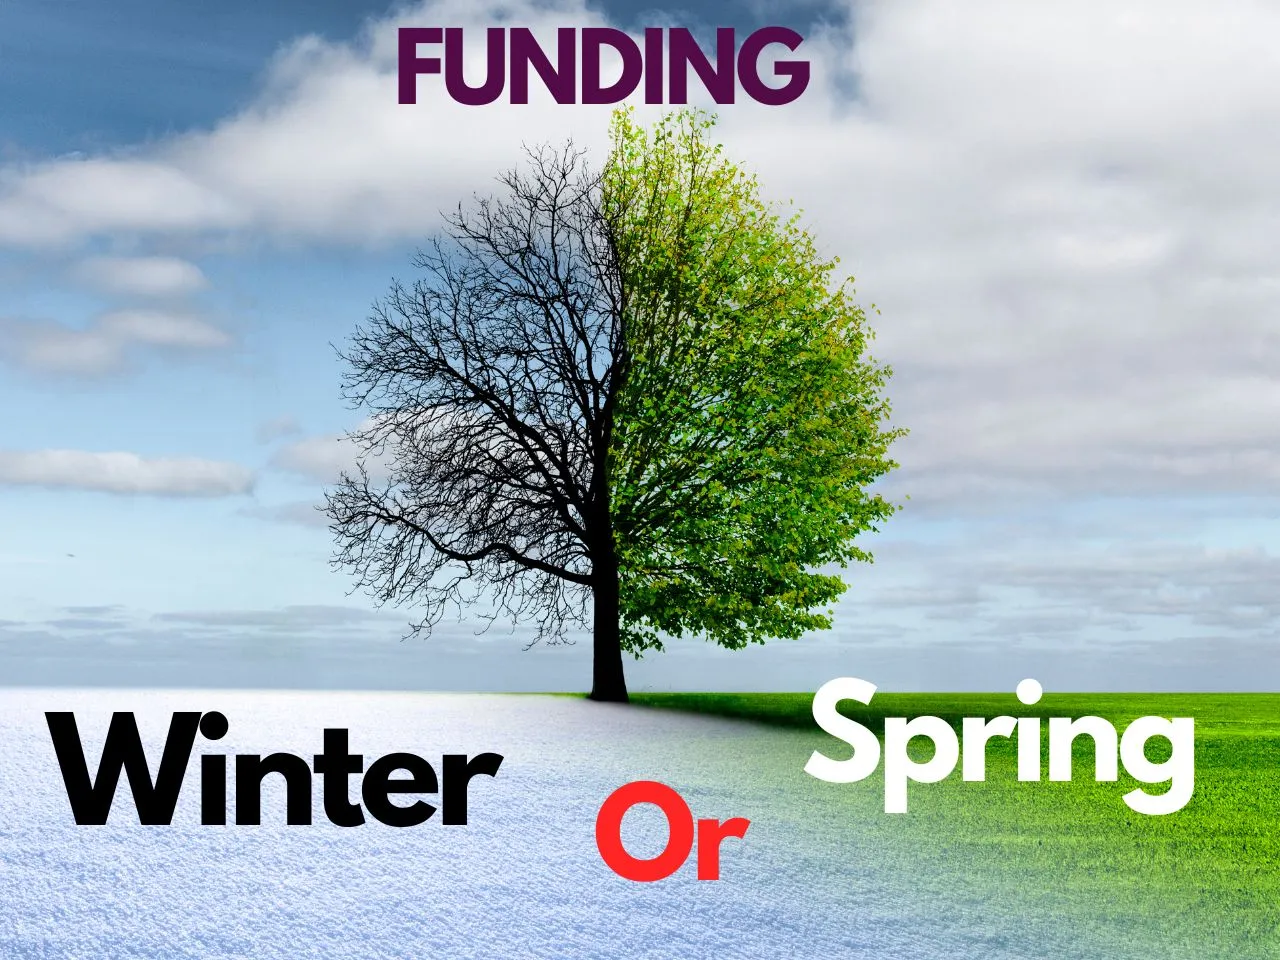 Funding Winter or Spring